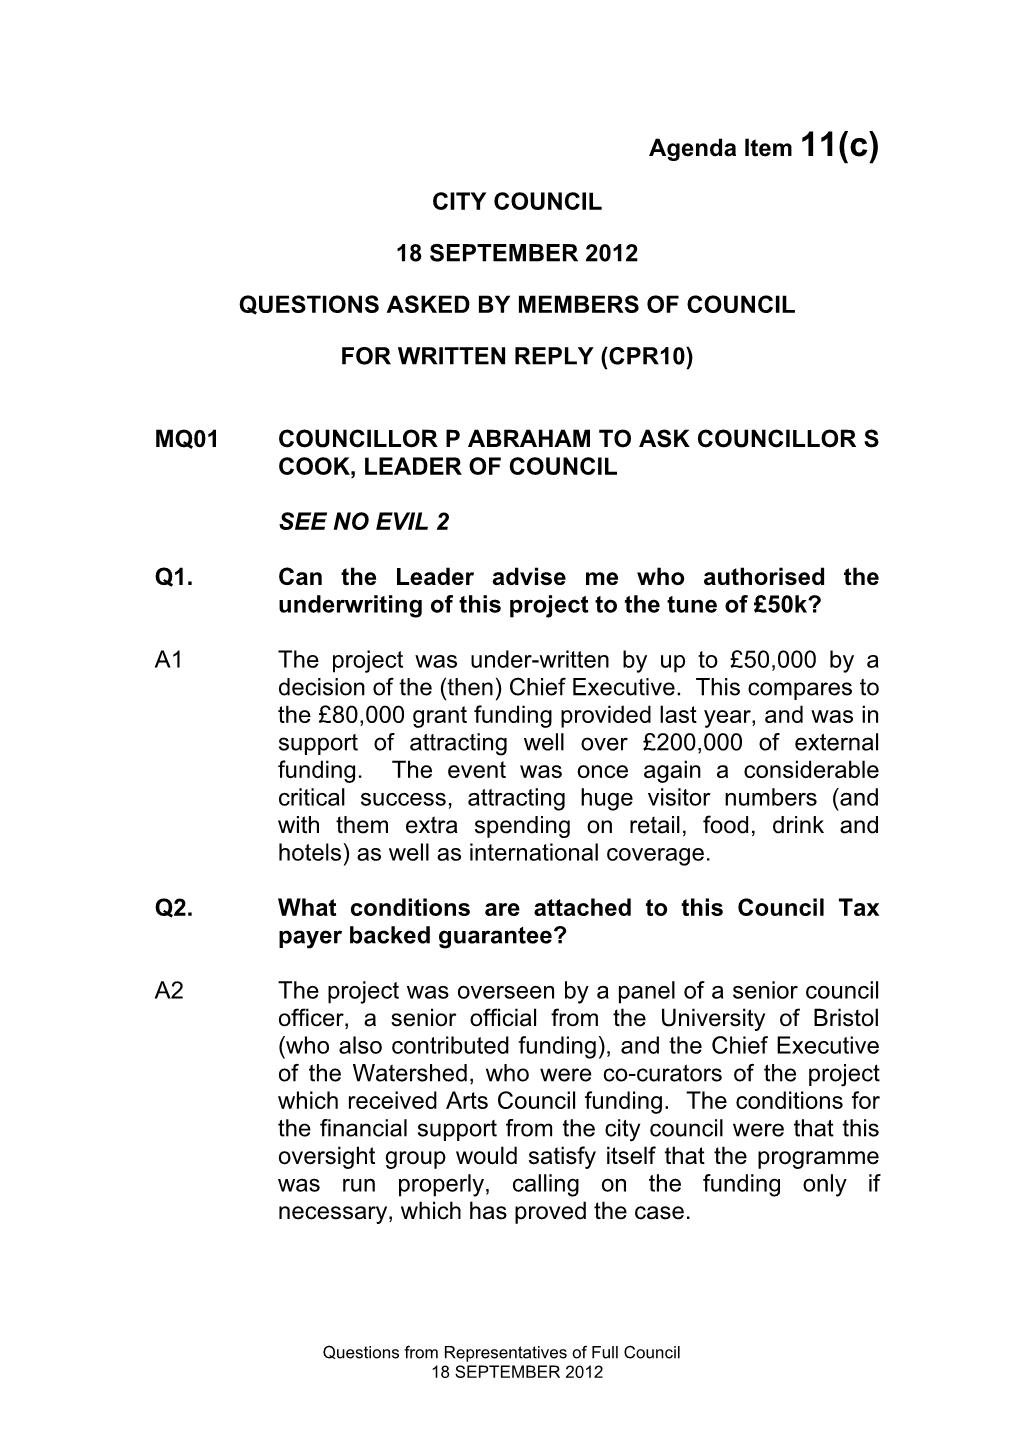 Agenda Item 11(C) CITY COUNCIL 18 SEPTEMBER 2012 QUESTIONS